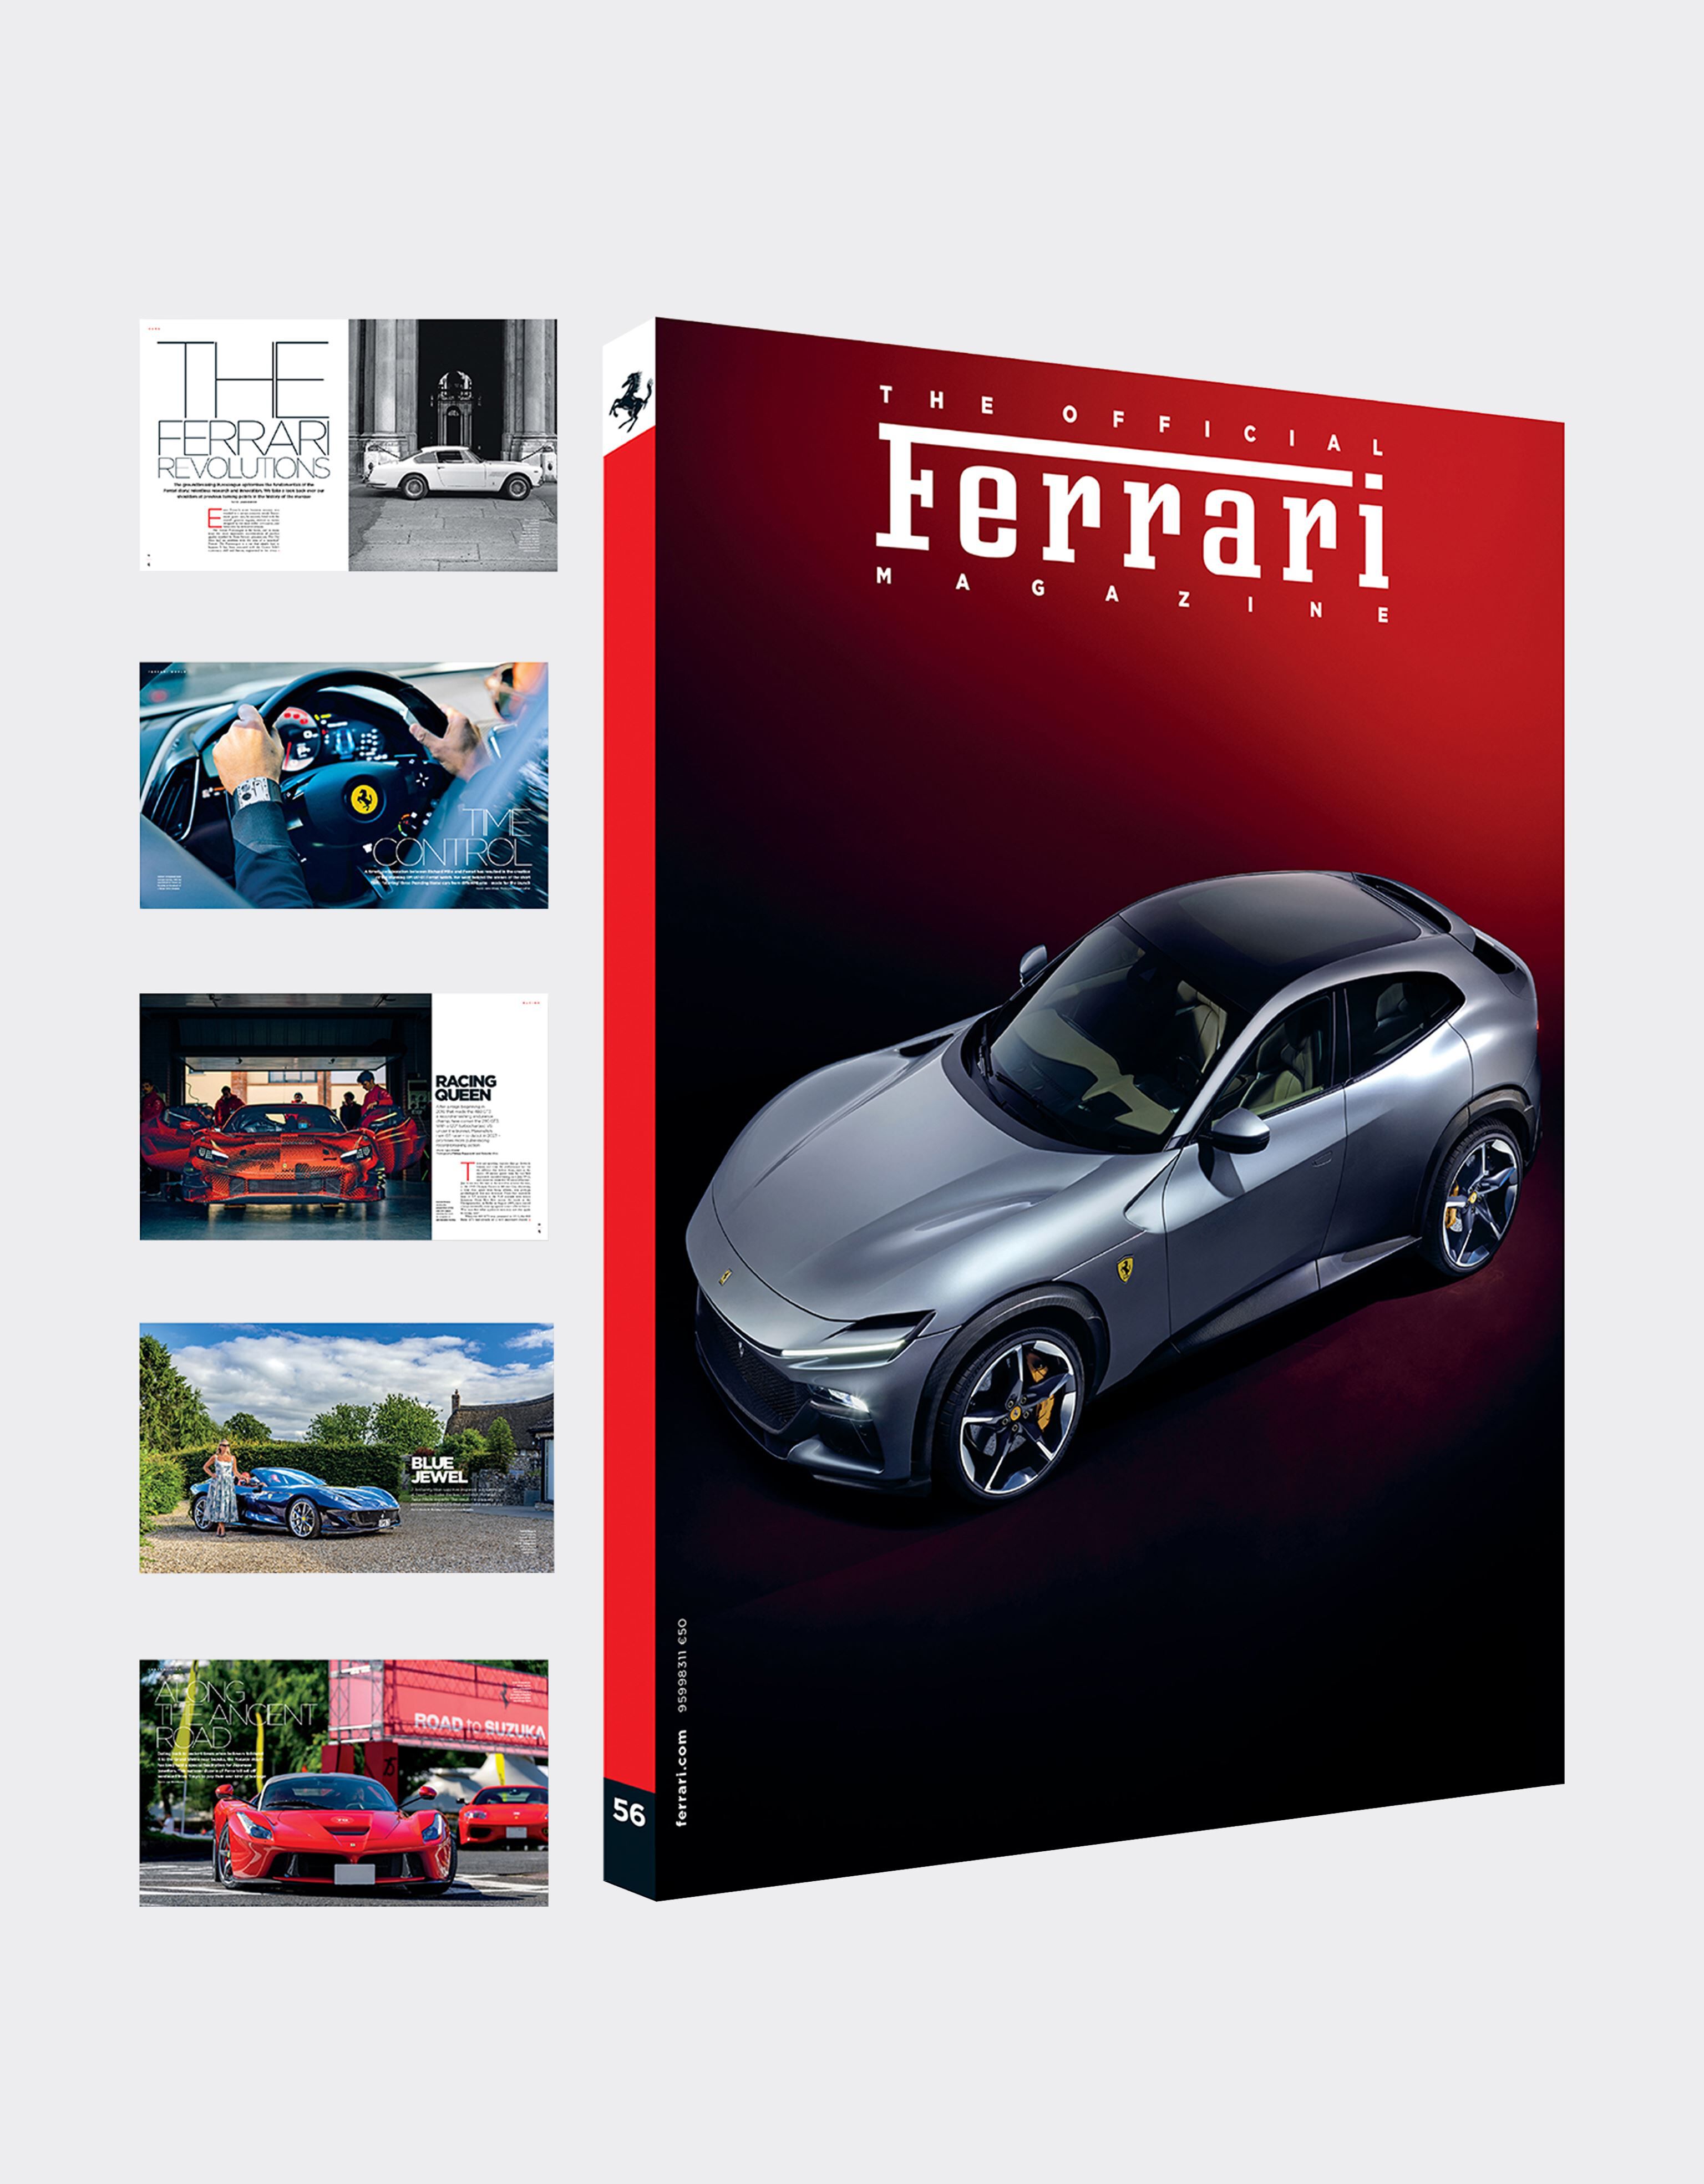 Ferrari The Official Ferrari Magazine Issue 56 MULTICOLOUR 48112f